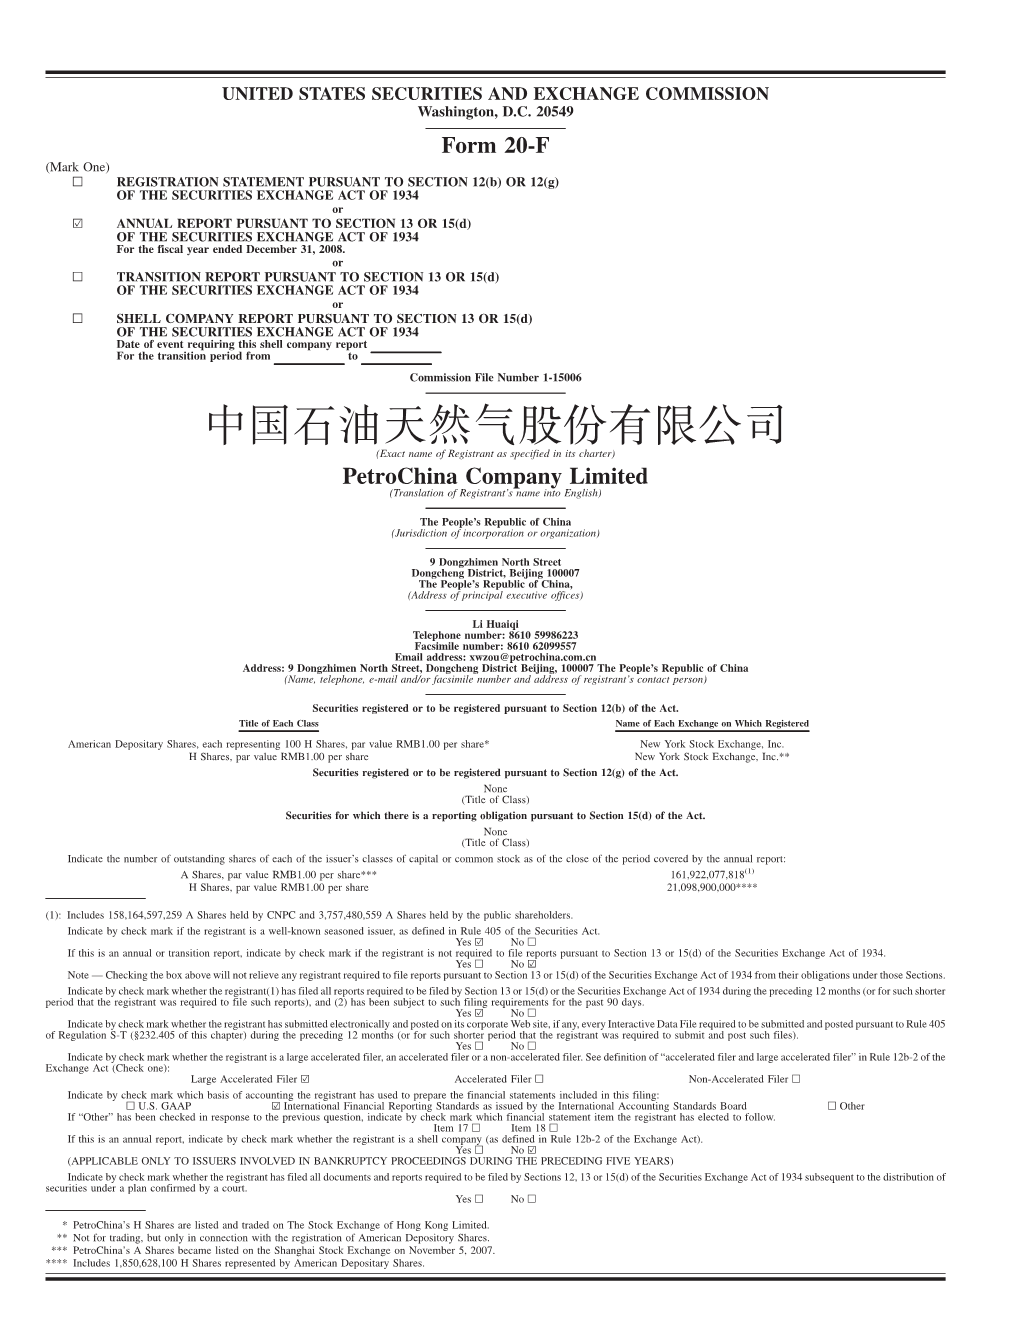 Form 20-F Petrochina Company Limited